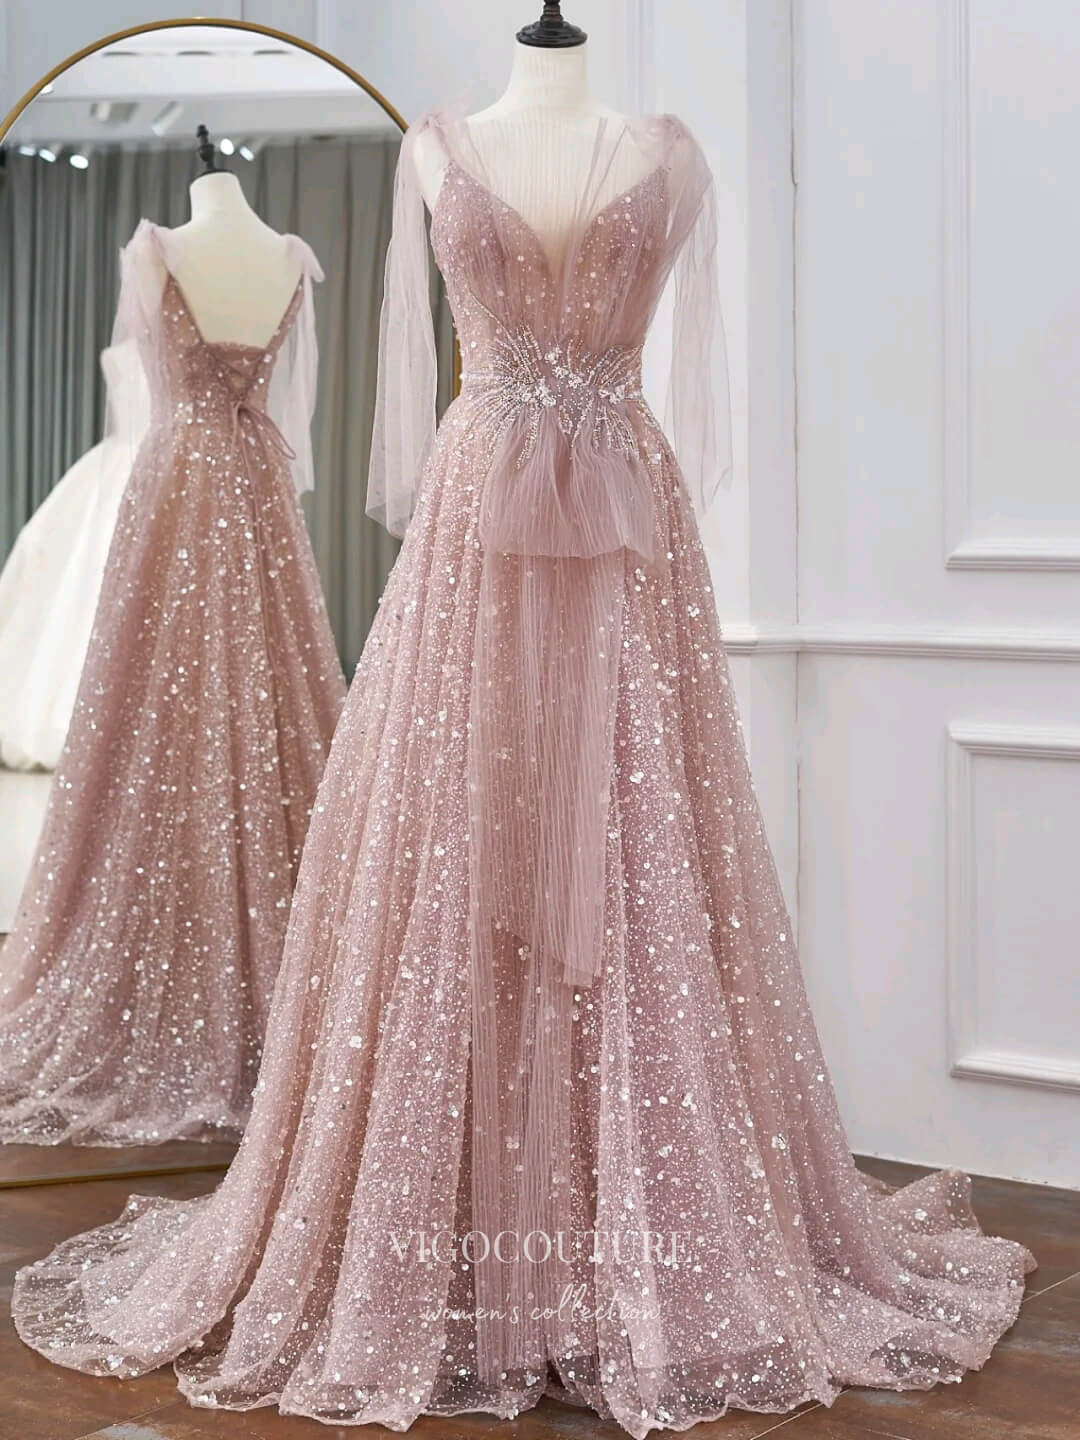 vigocouture-Sparkly Blush Sequin Prom Dresses Spaghetti Strap Formal Dresses 21189-Prom Dresses-vigocouture-Blush-Custom Size-